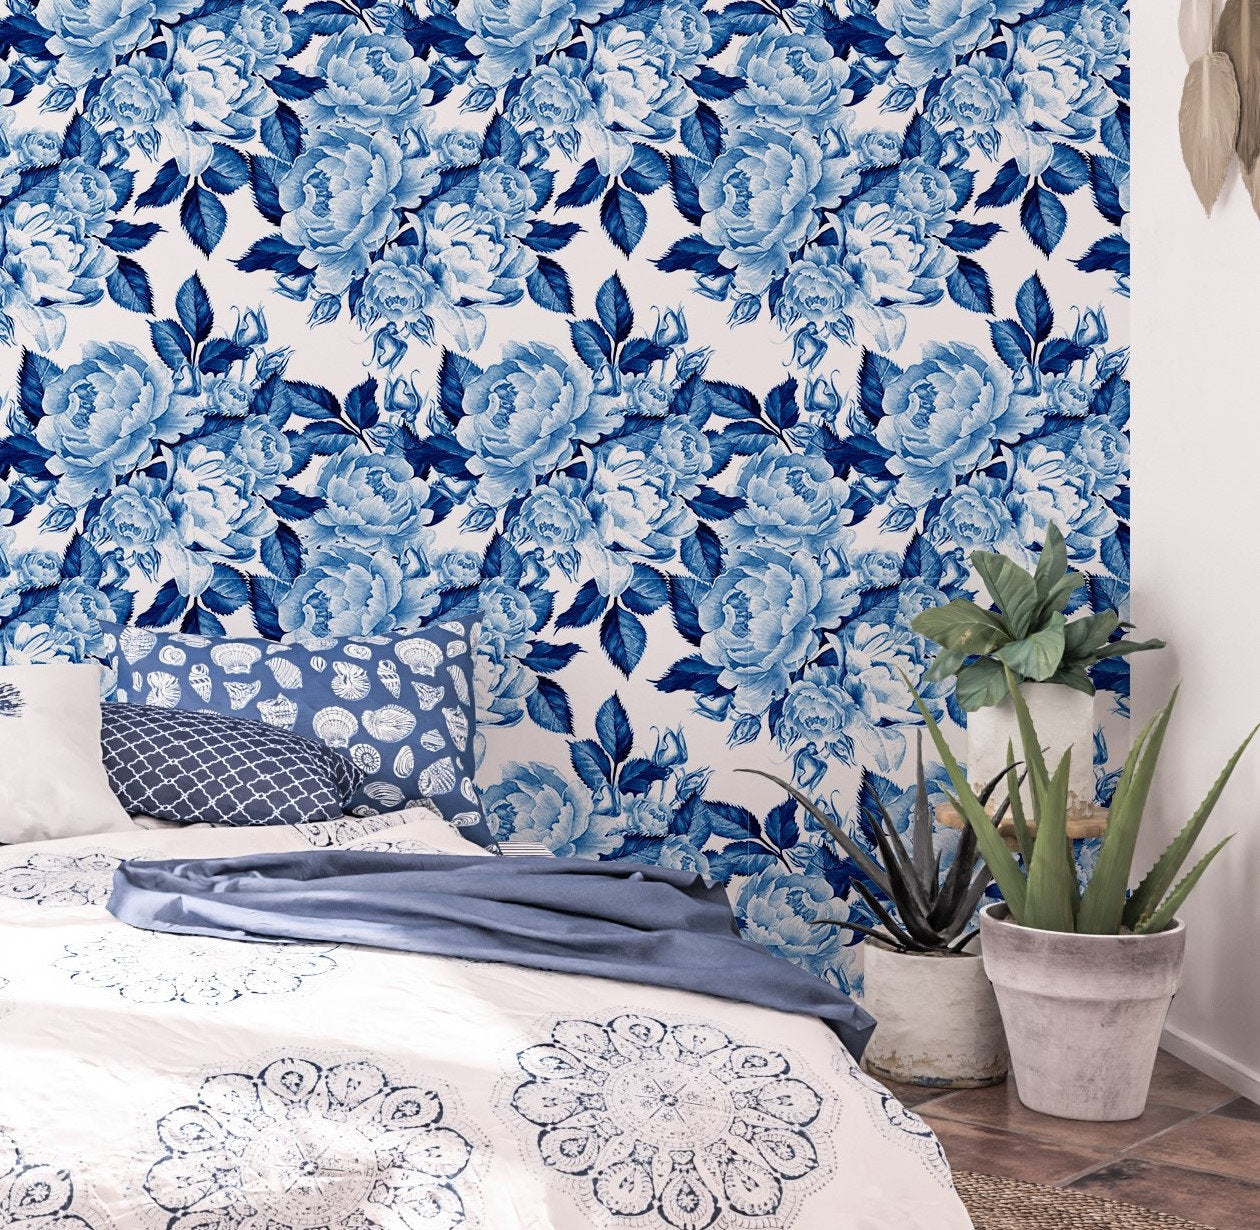 Blue Rose Wallpaper Peel and Stick, Blue Floral Wallpaper, Peony Wallpaper, Removable Wall Paper